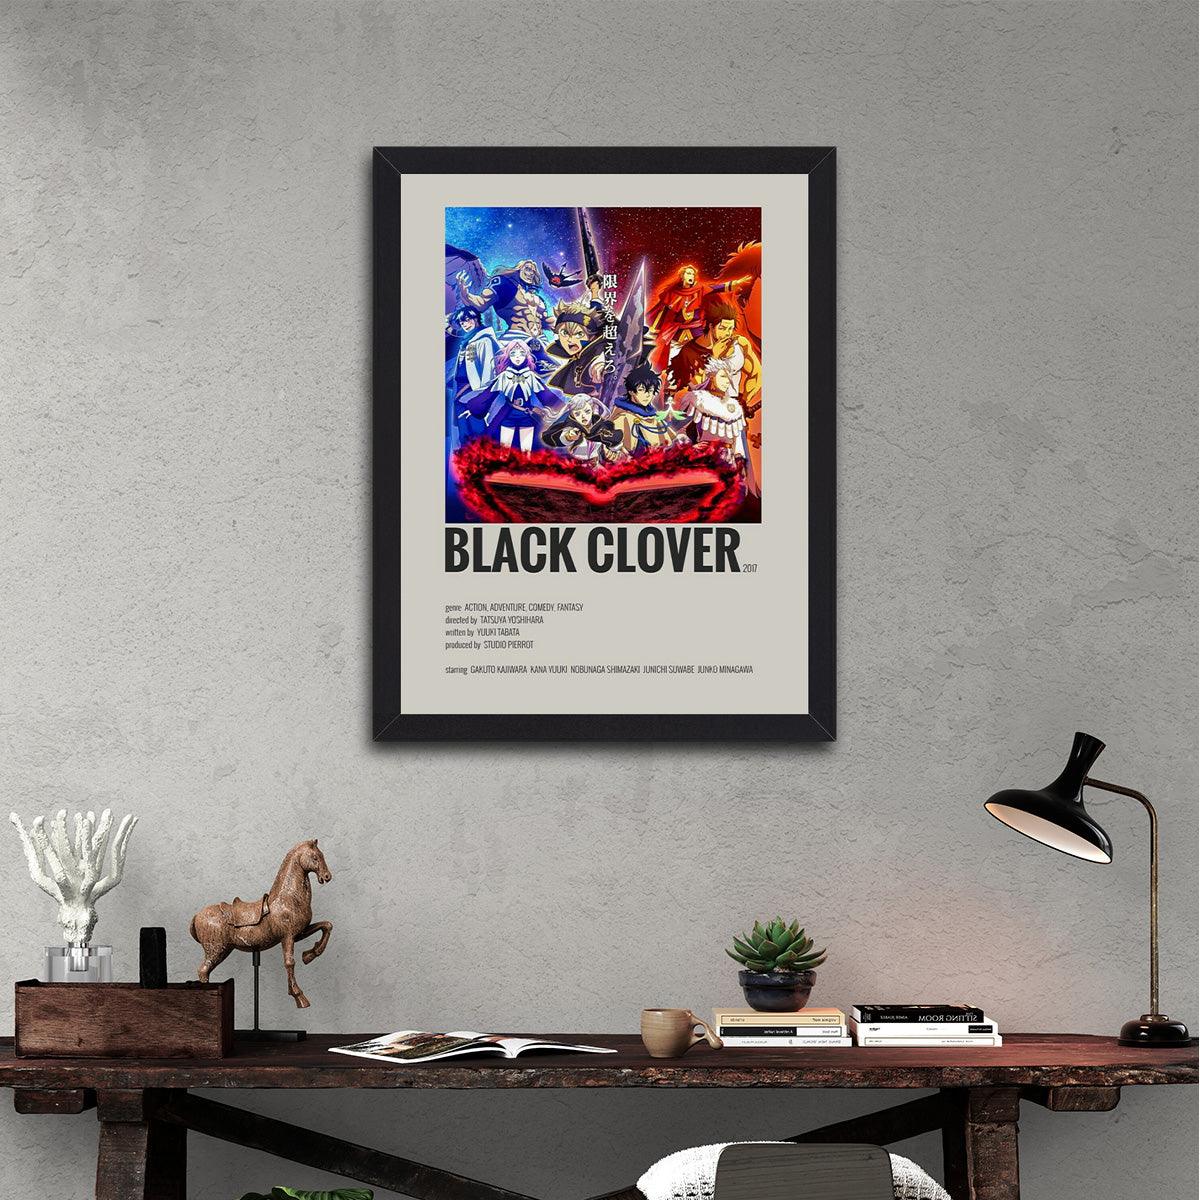 Black Clover - PixMagic